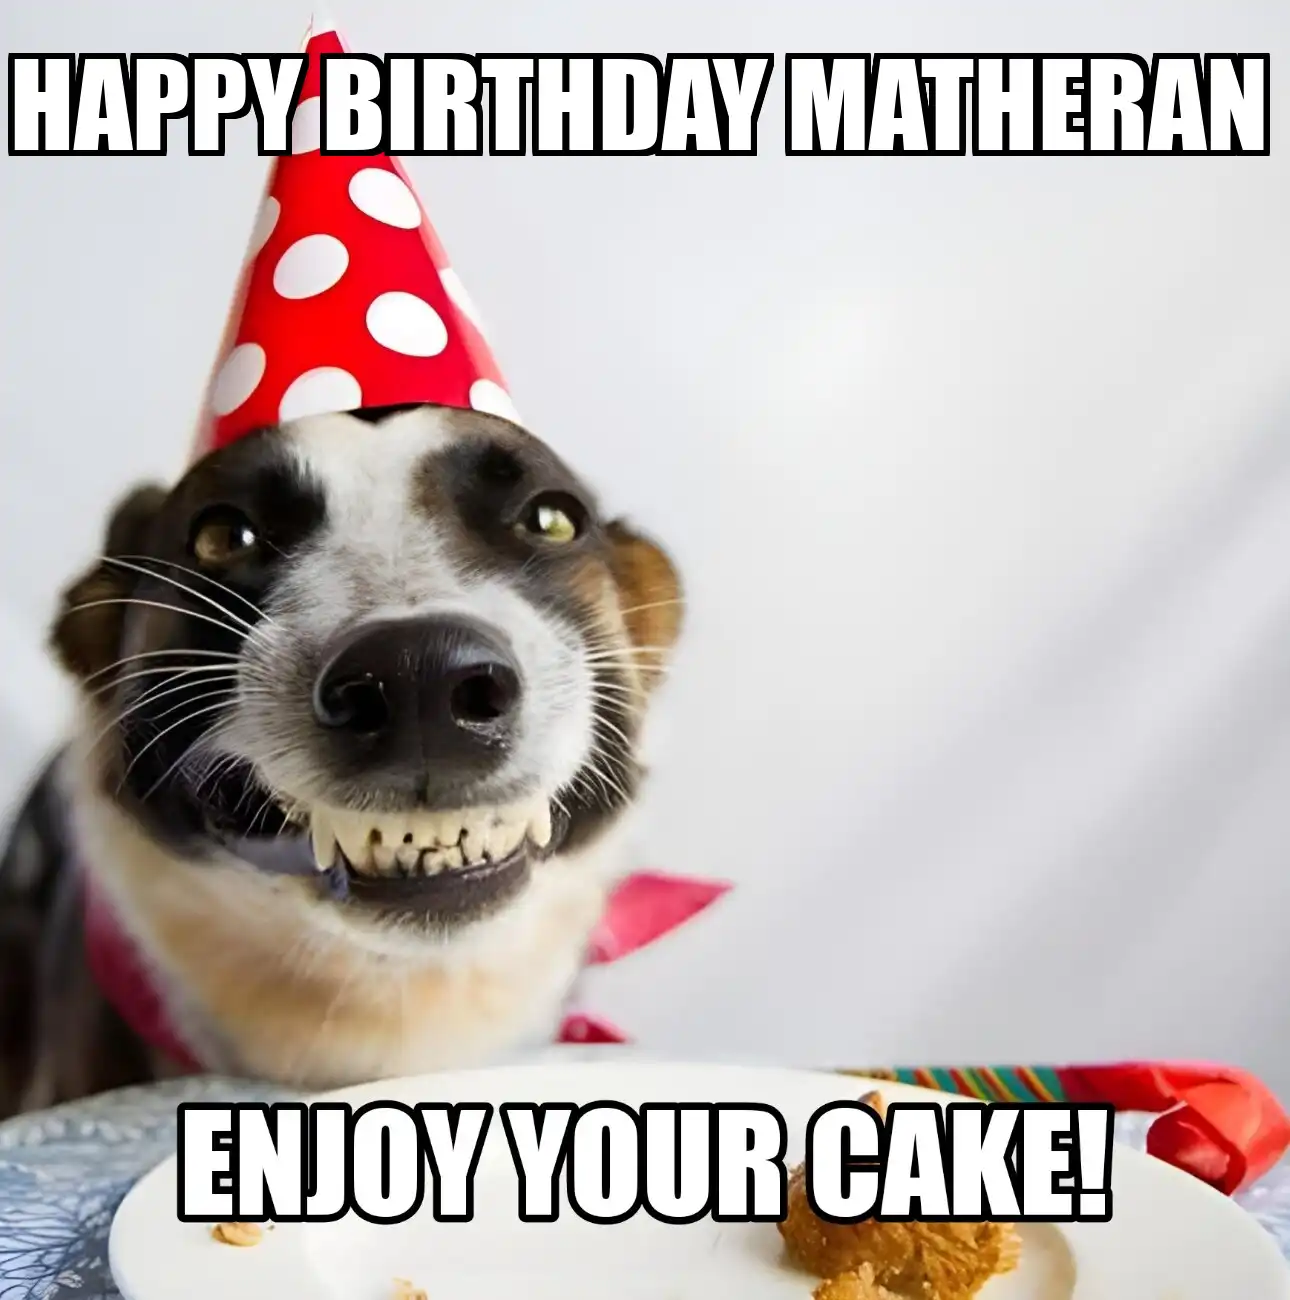 Happy Birthday Matheran Enjoy Your Cake Dog Meme